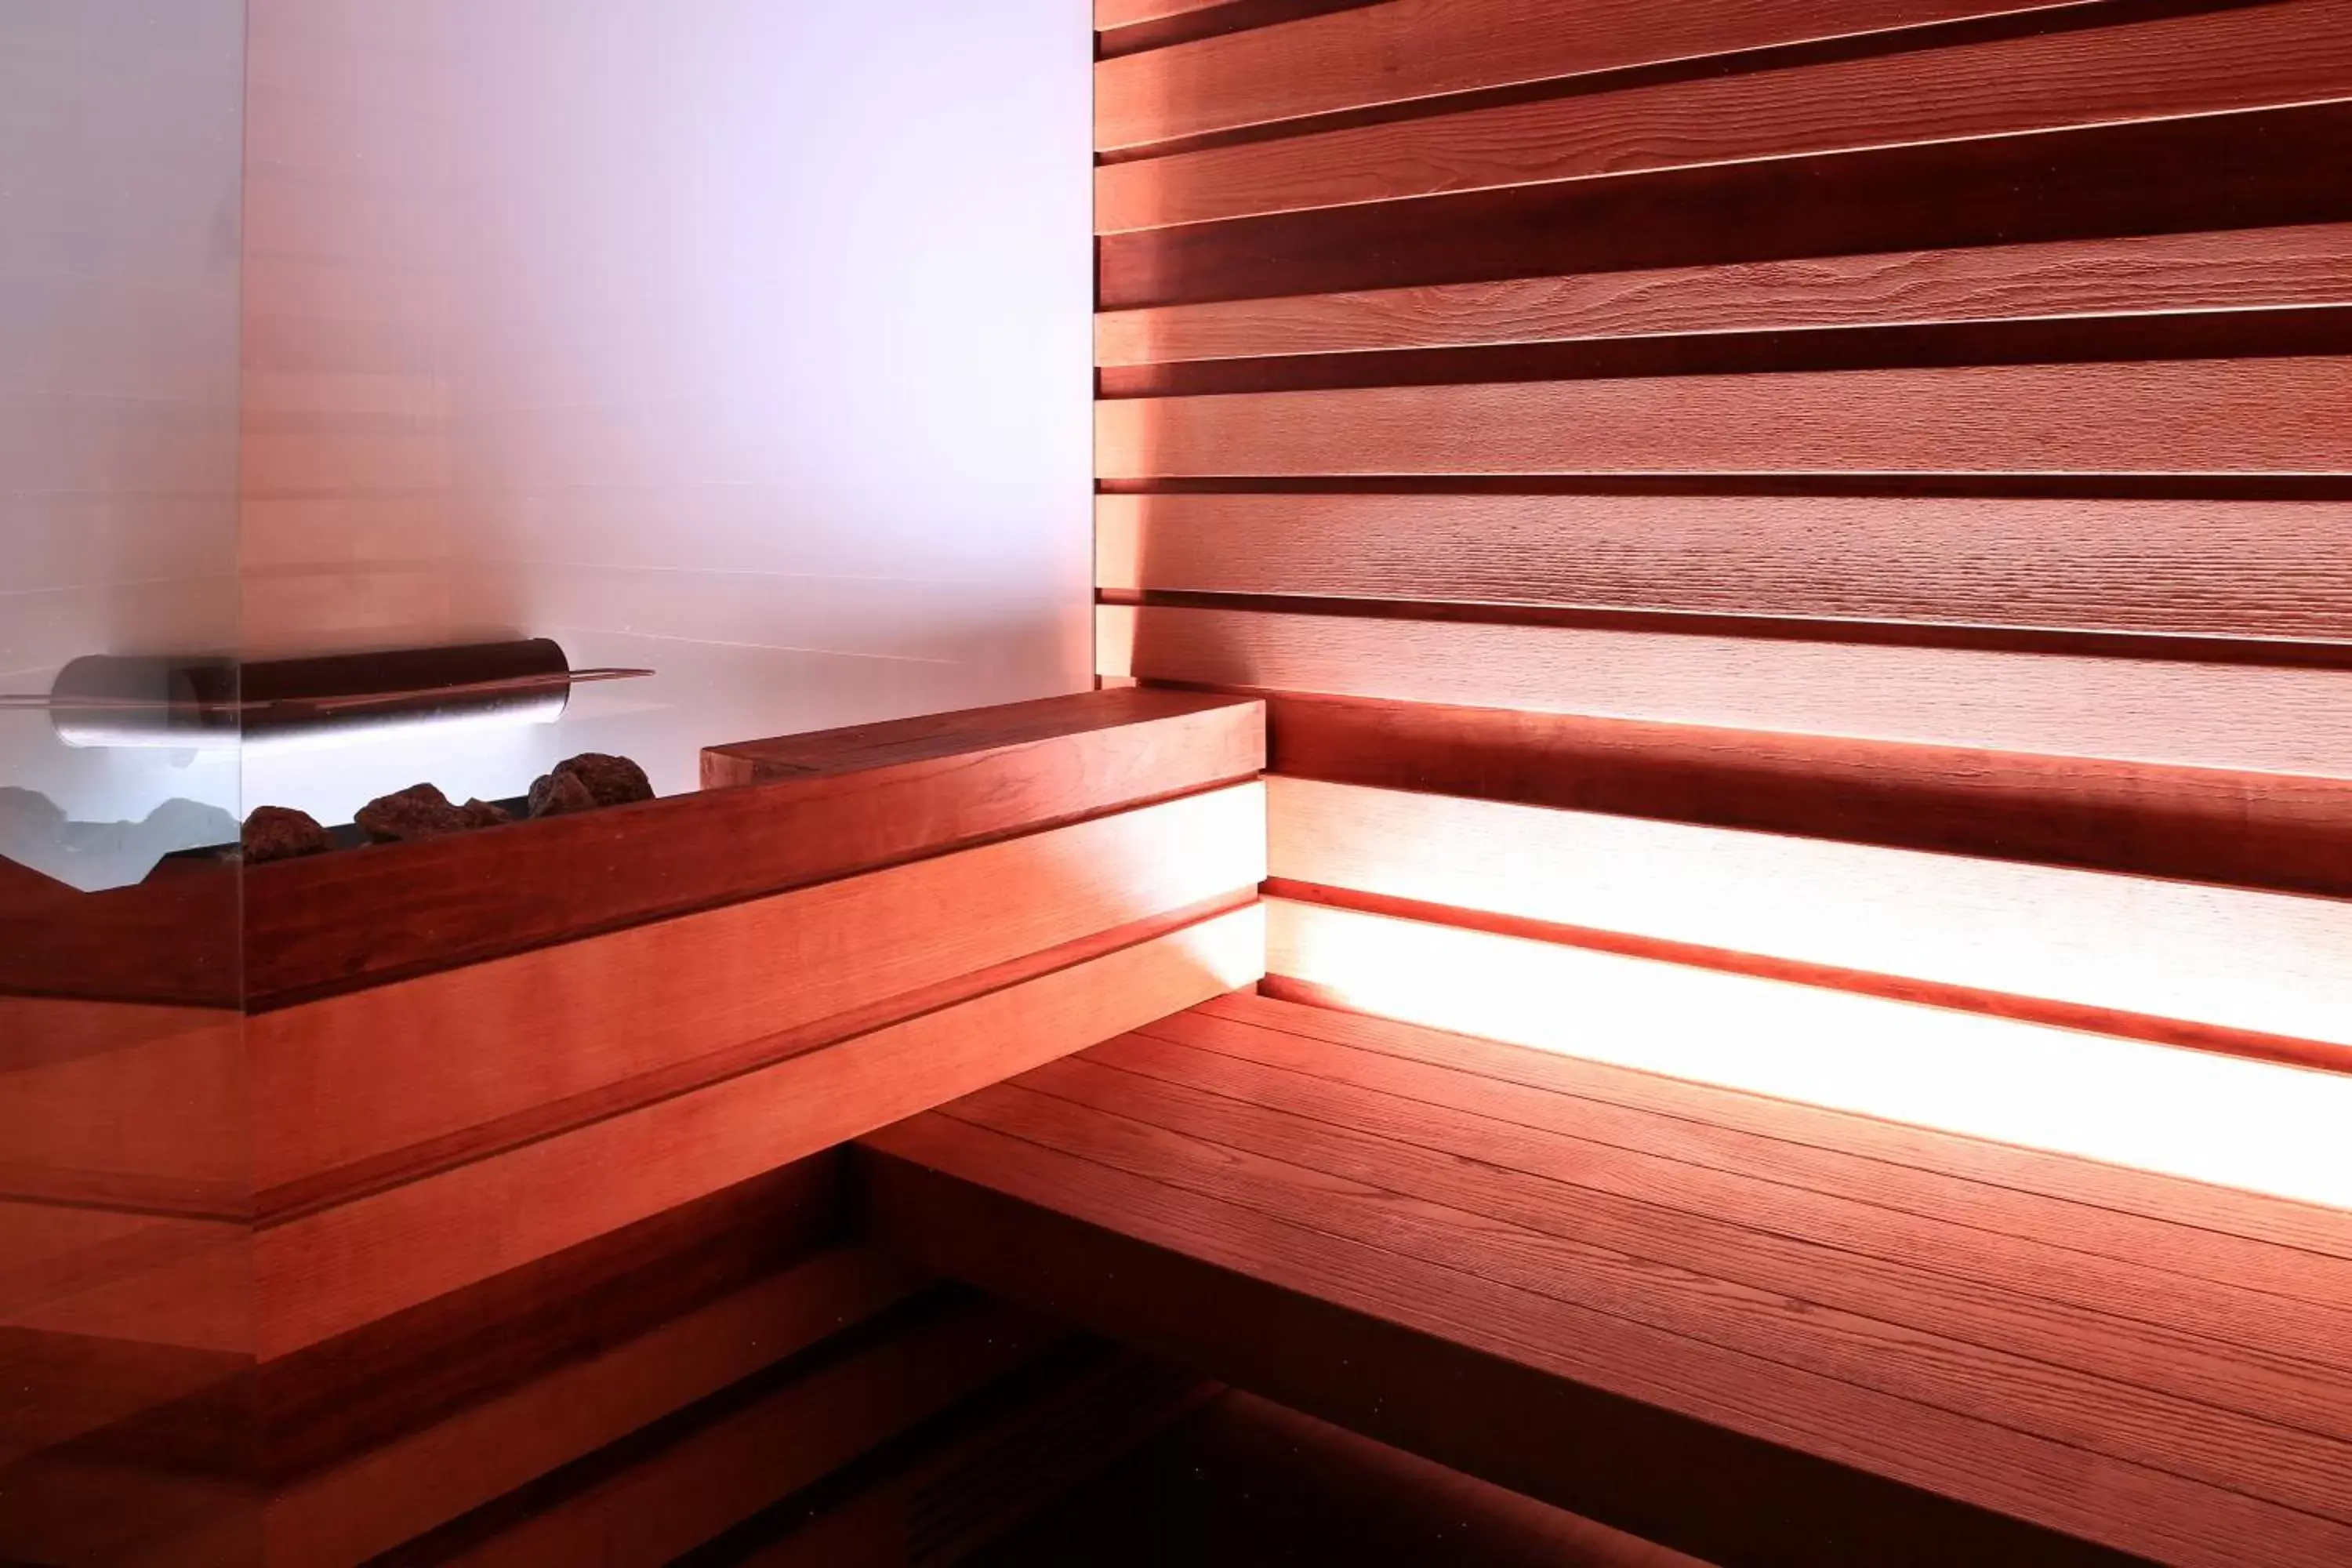 Sauna in Klima Hotel Milano Fiere